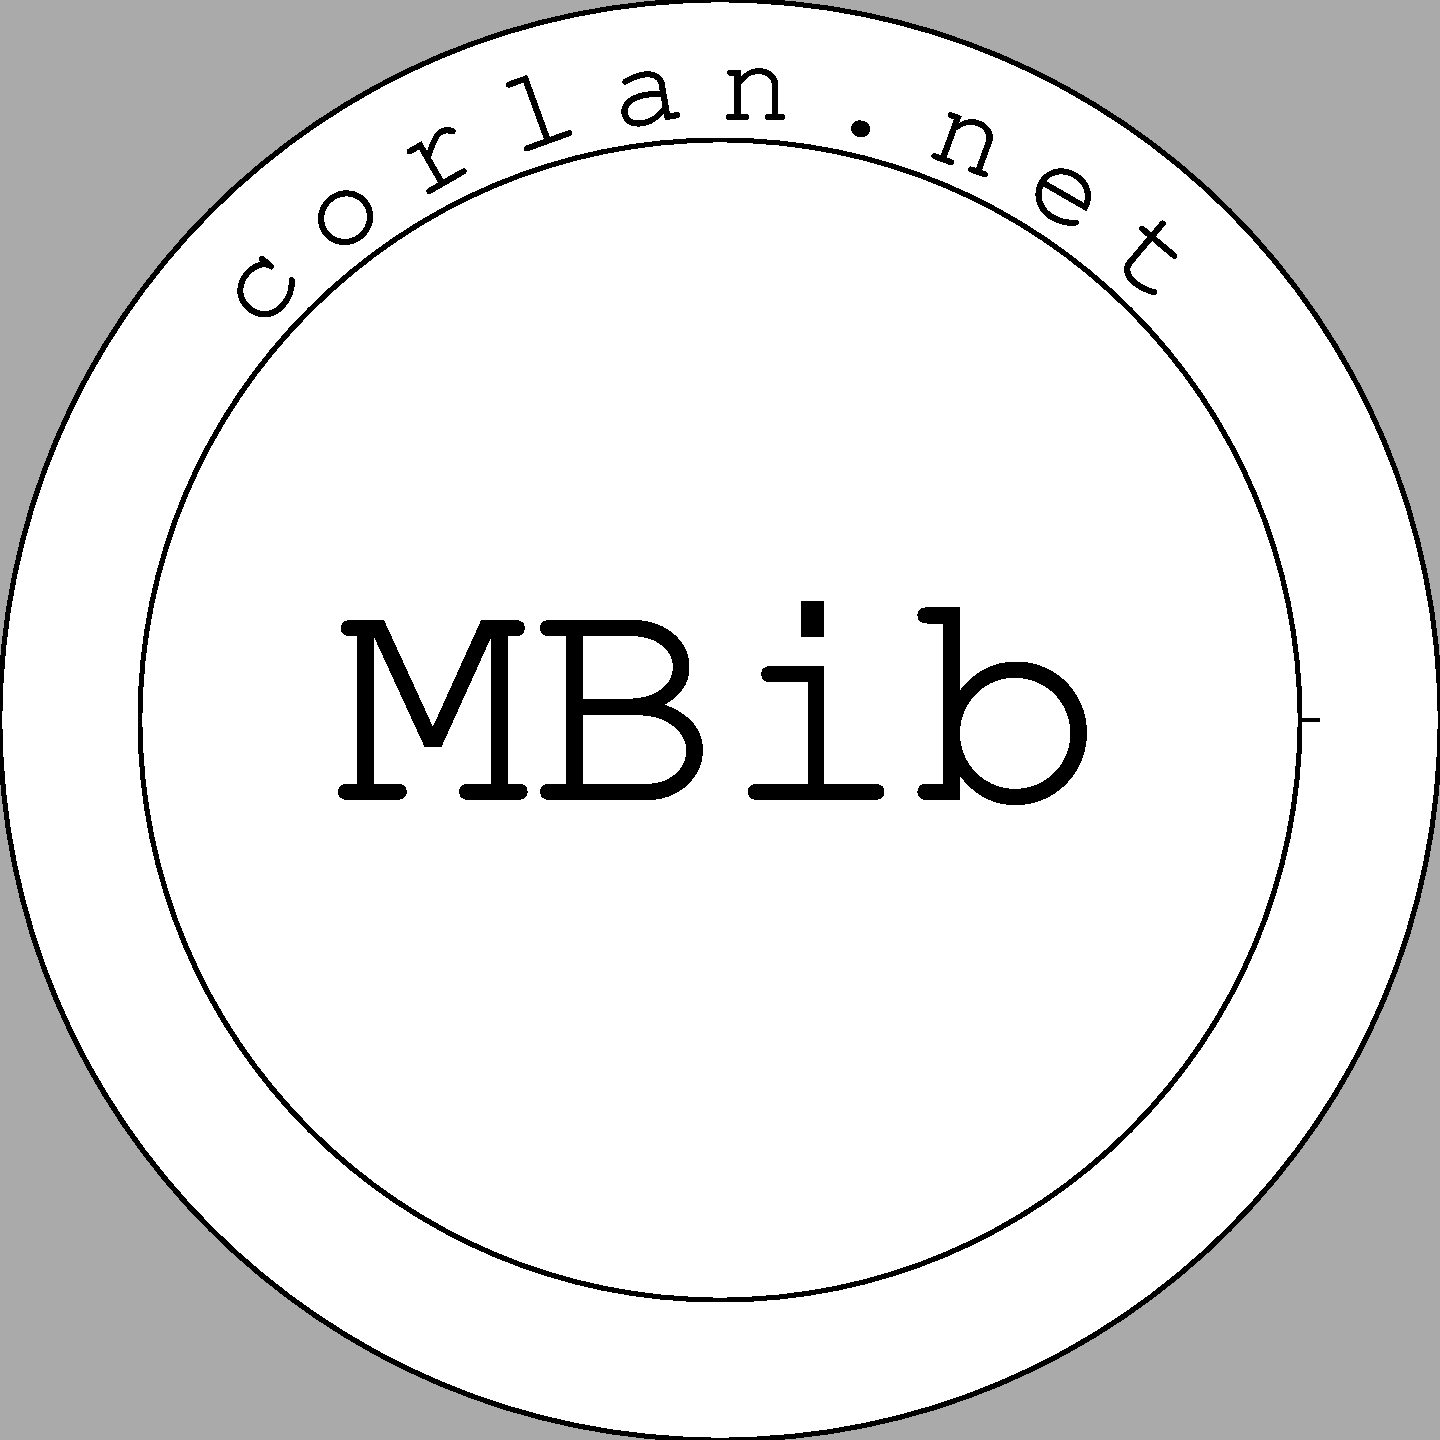 medline-bibtex-corlan.net